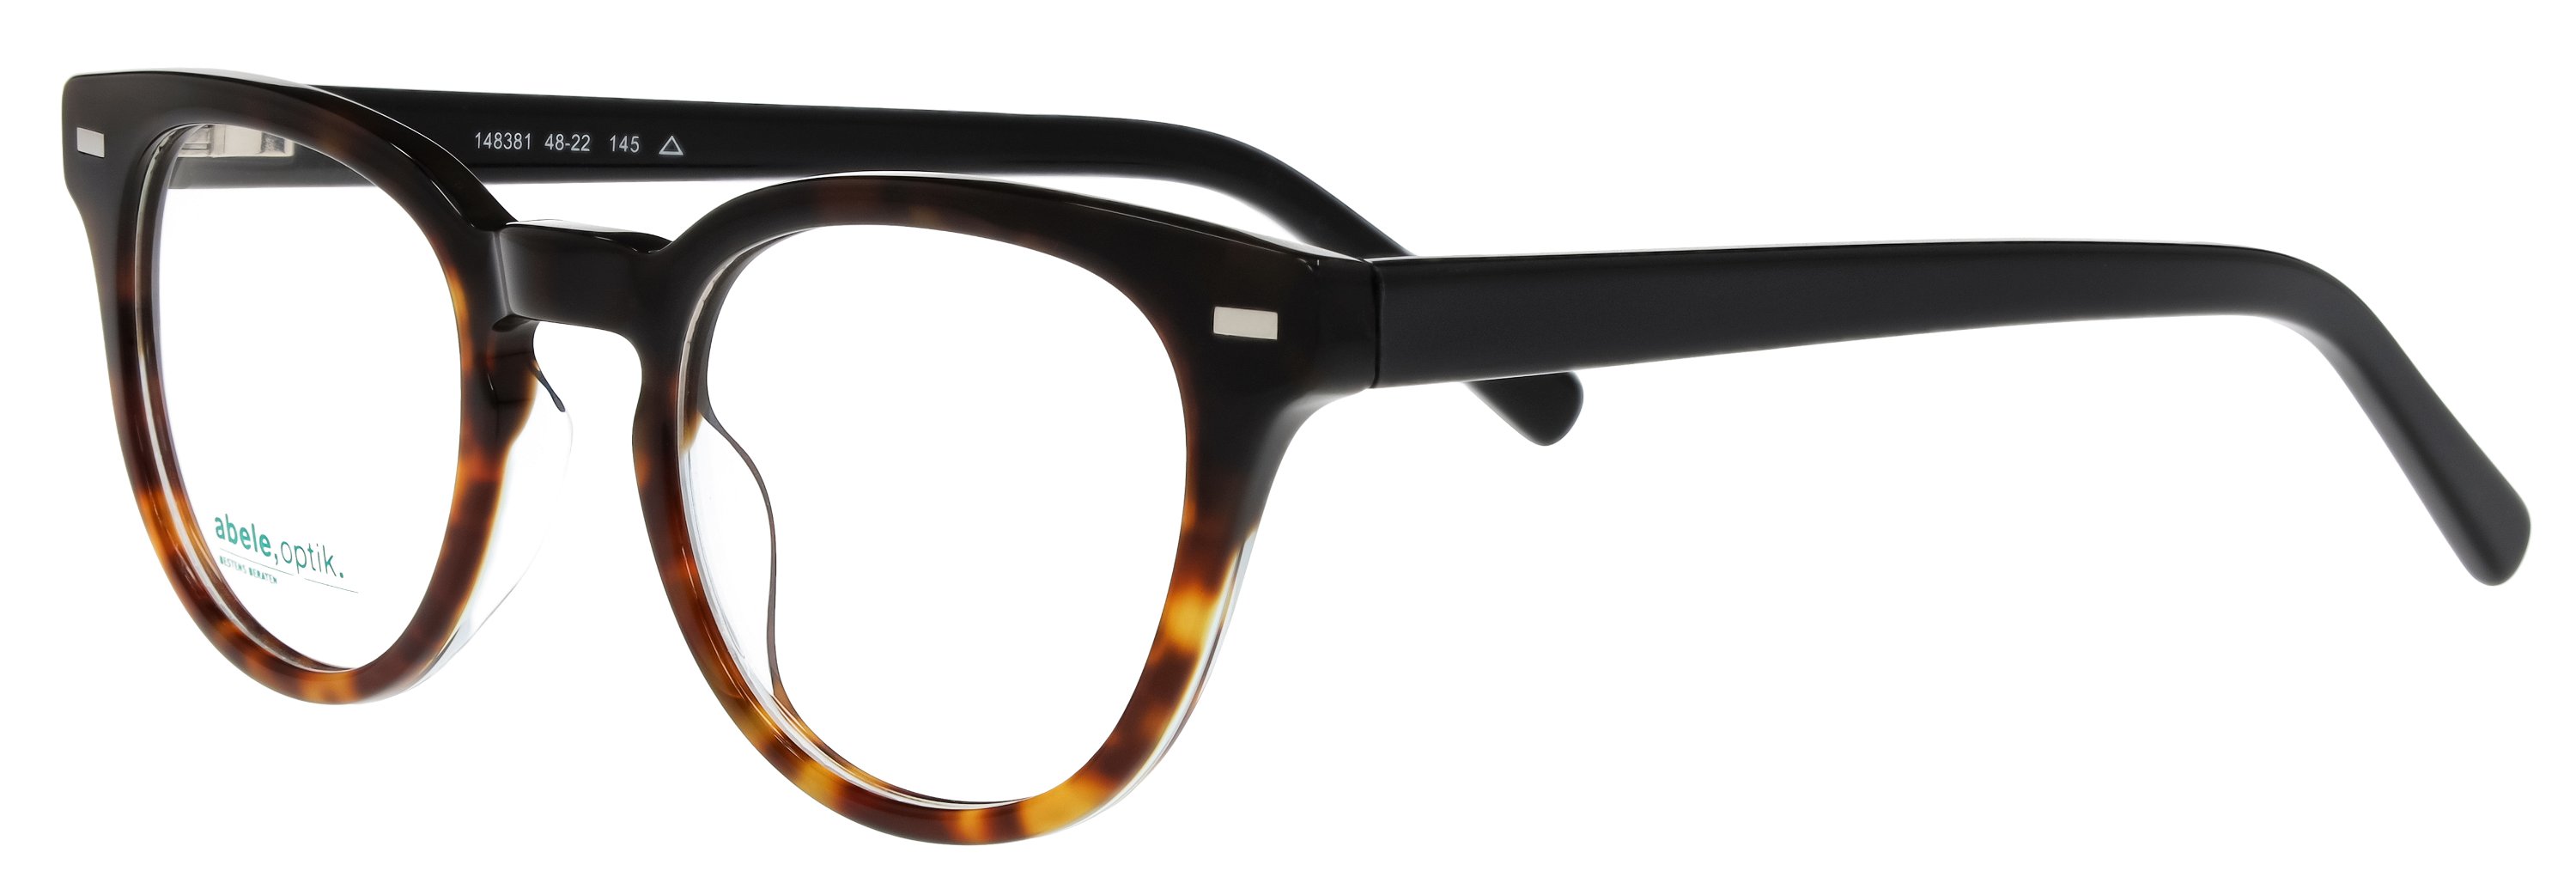 abele optik Brille für Damen in dunkelbraun / havanna 148381